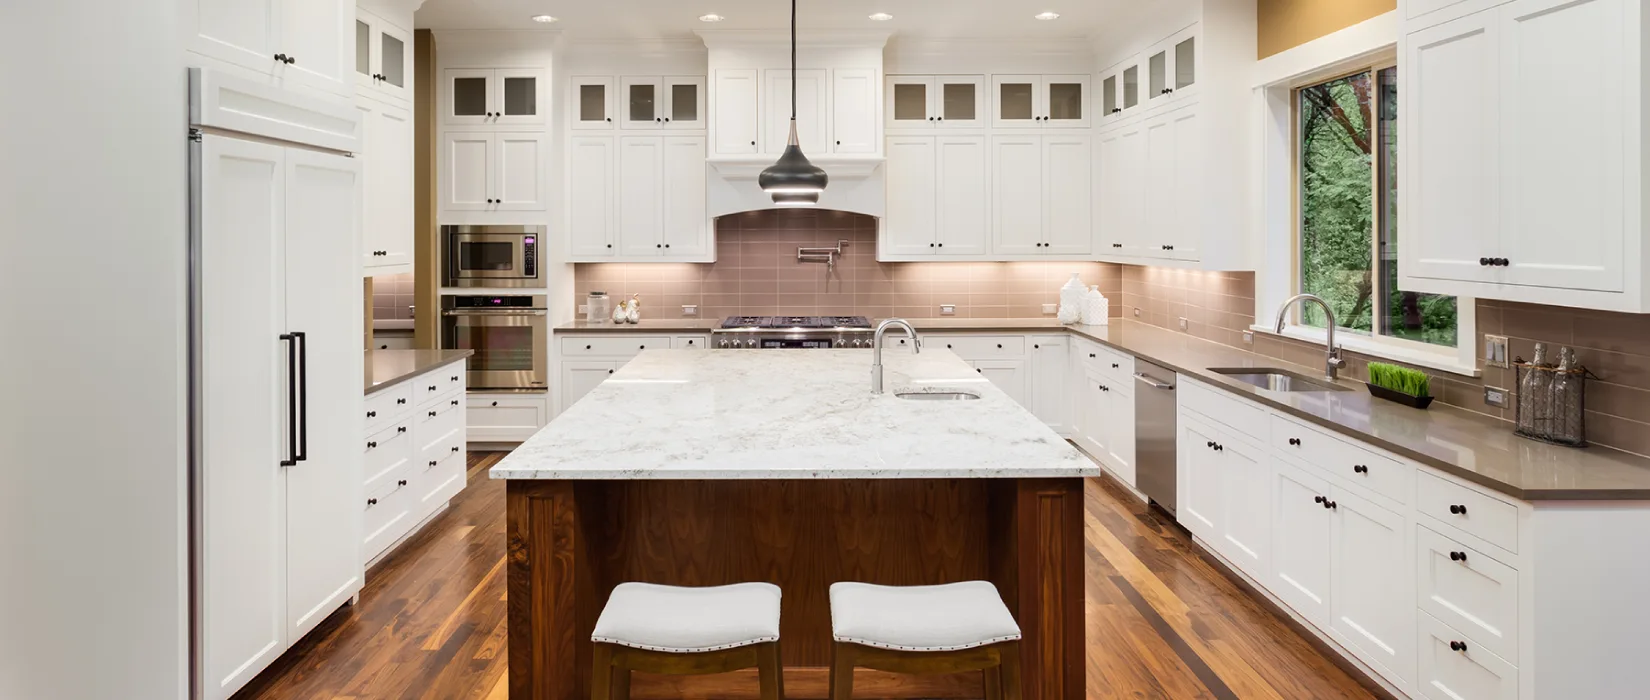 Kitchen with updated white kitchen cabinets.